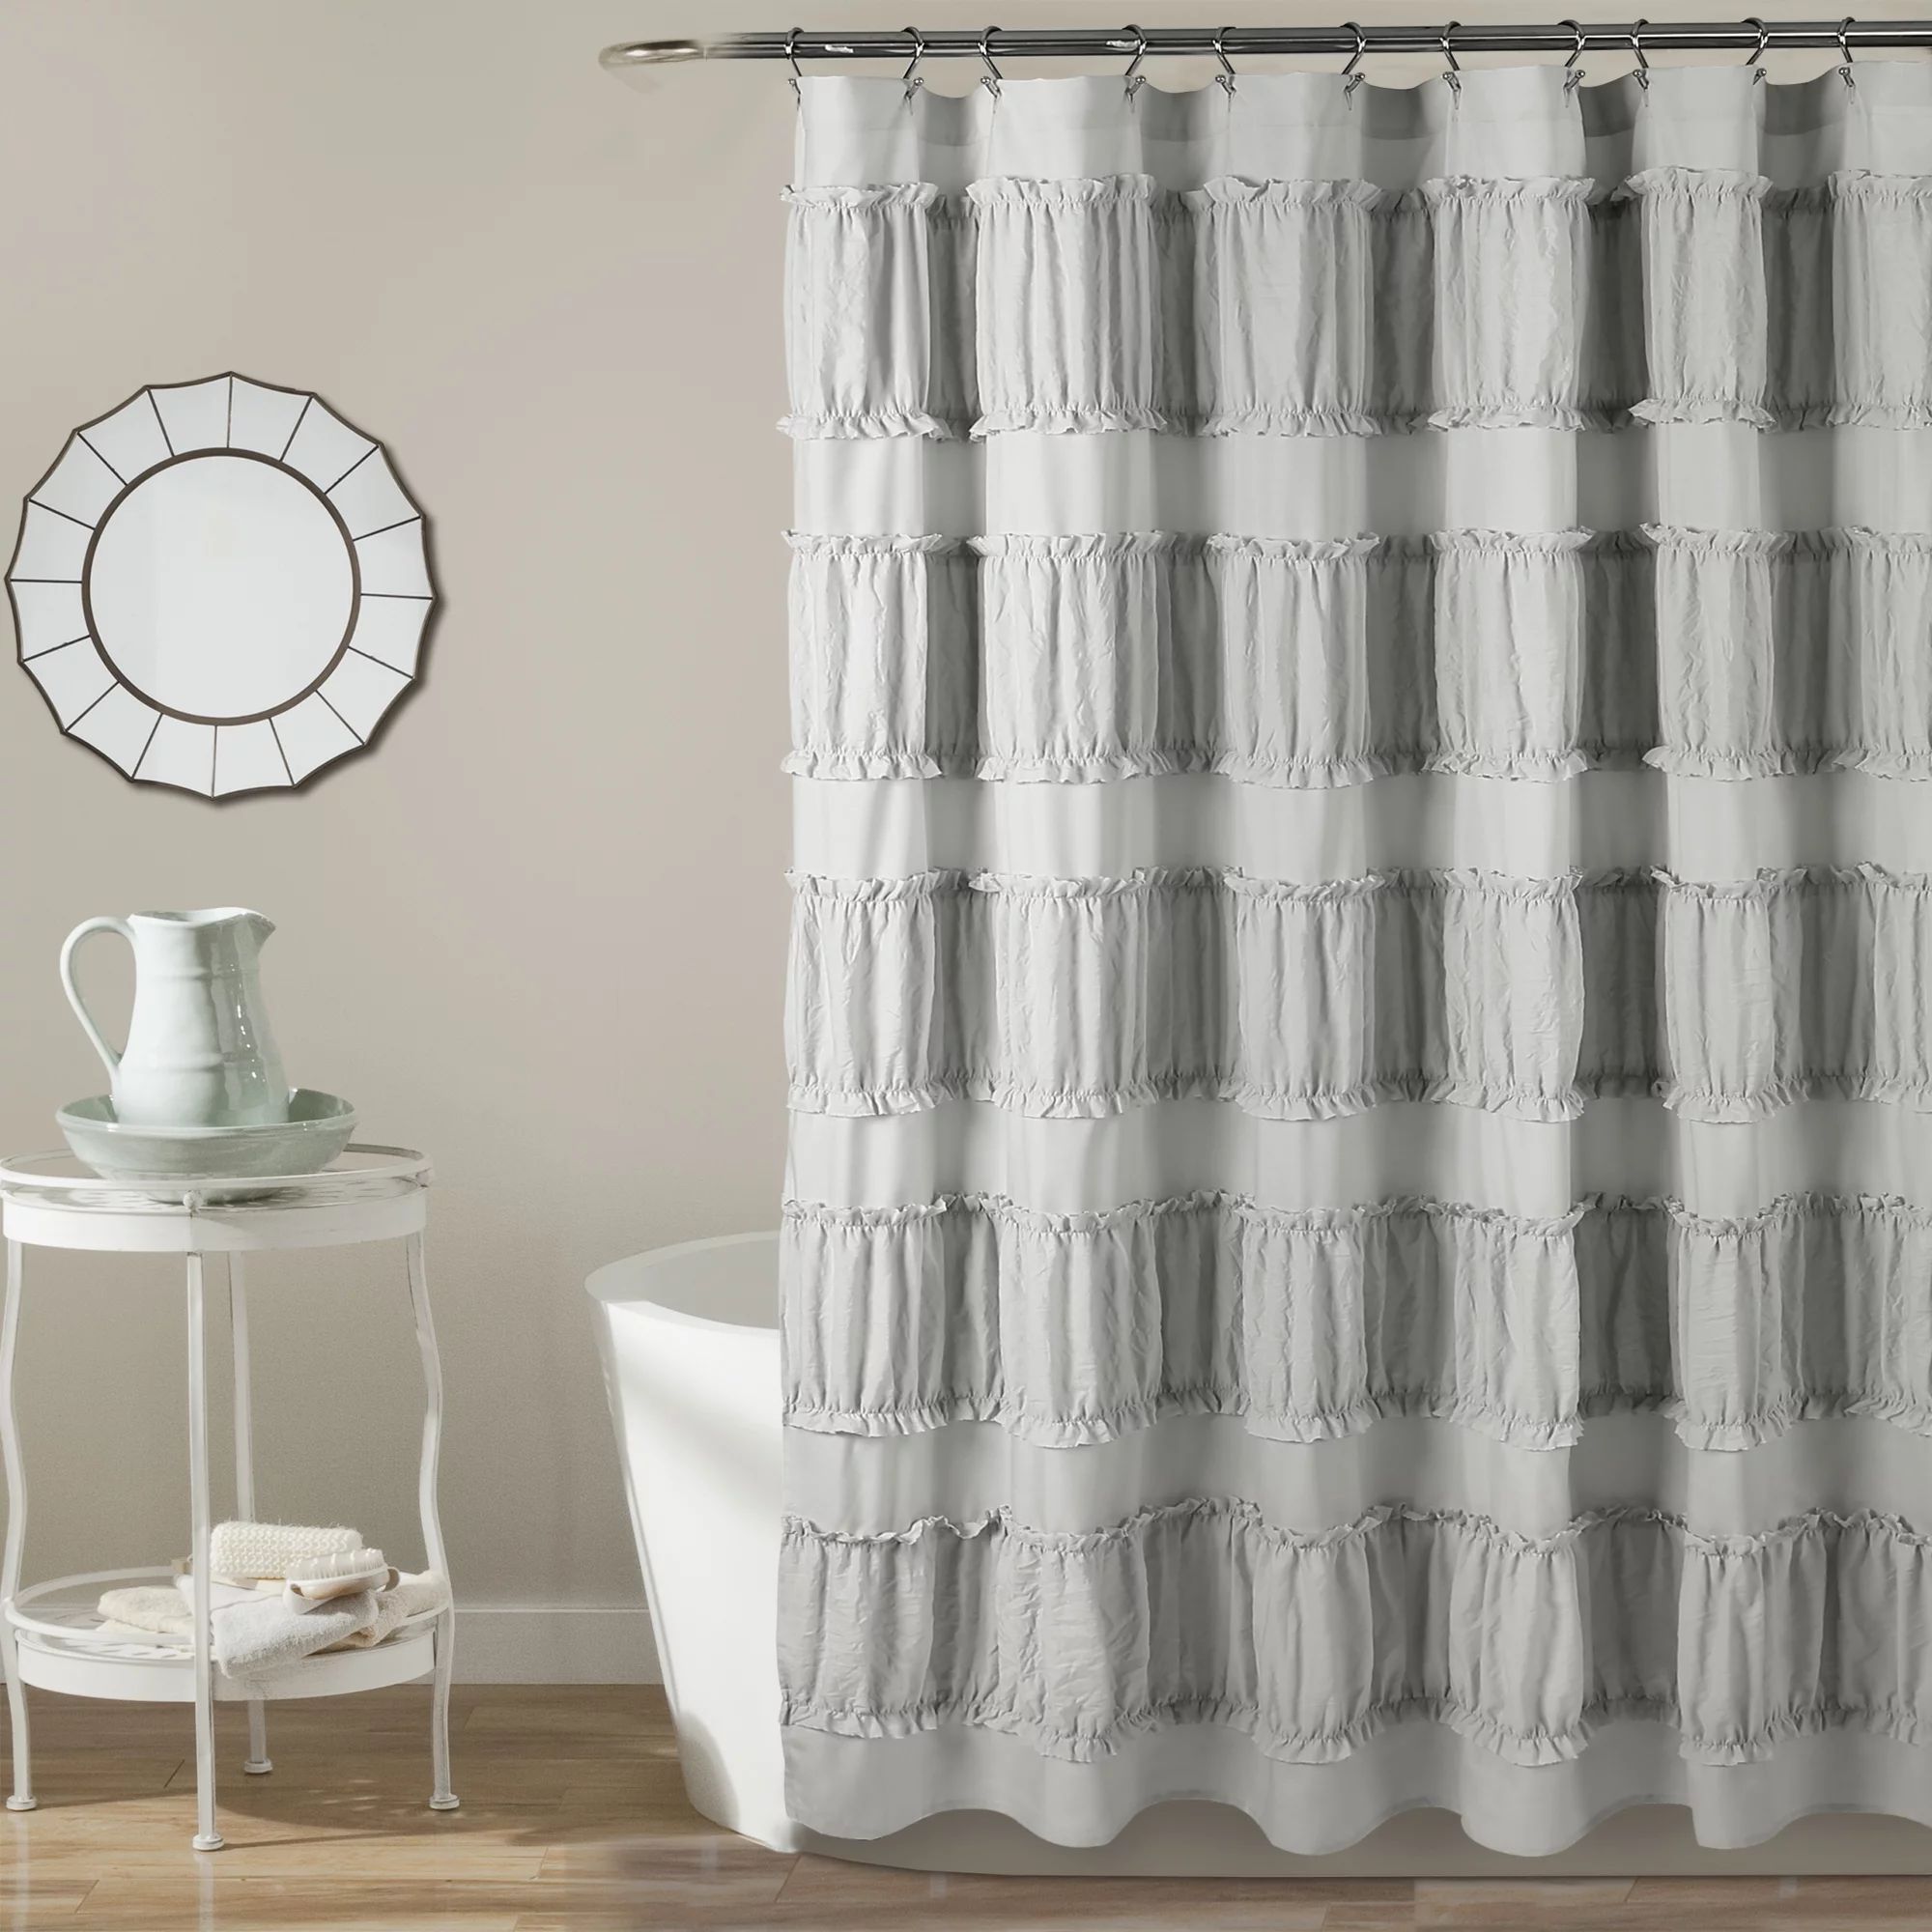 Lush Decor Nova Ruffle Textured Polyester Shower Curtain, 72x72, Gray, Single | Walmart (US)